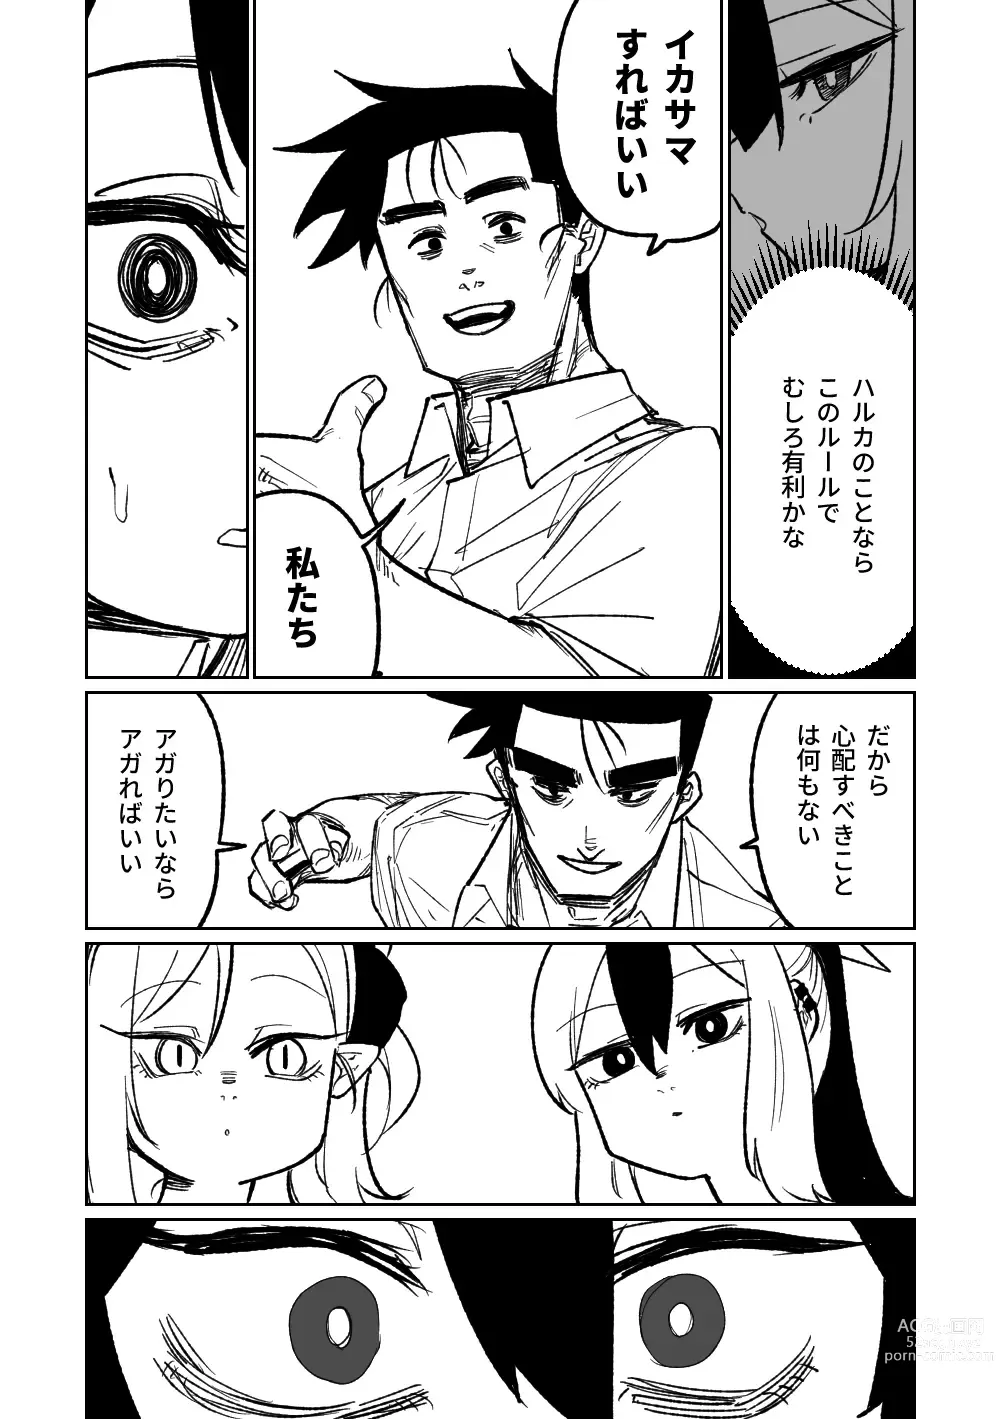 Page 188 of doujinshi Benriya 68 Datsui Mahjong Ichi ~Sankaisen~